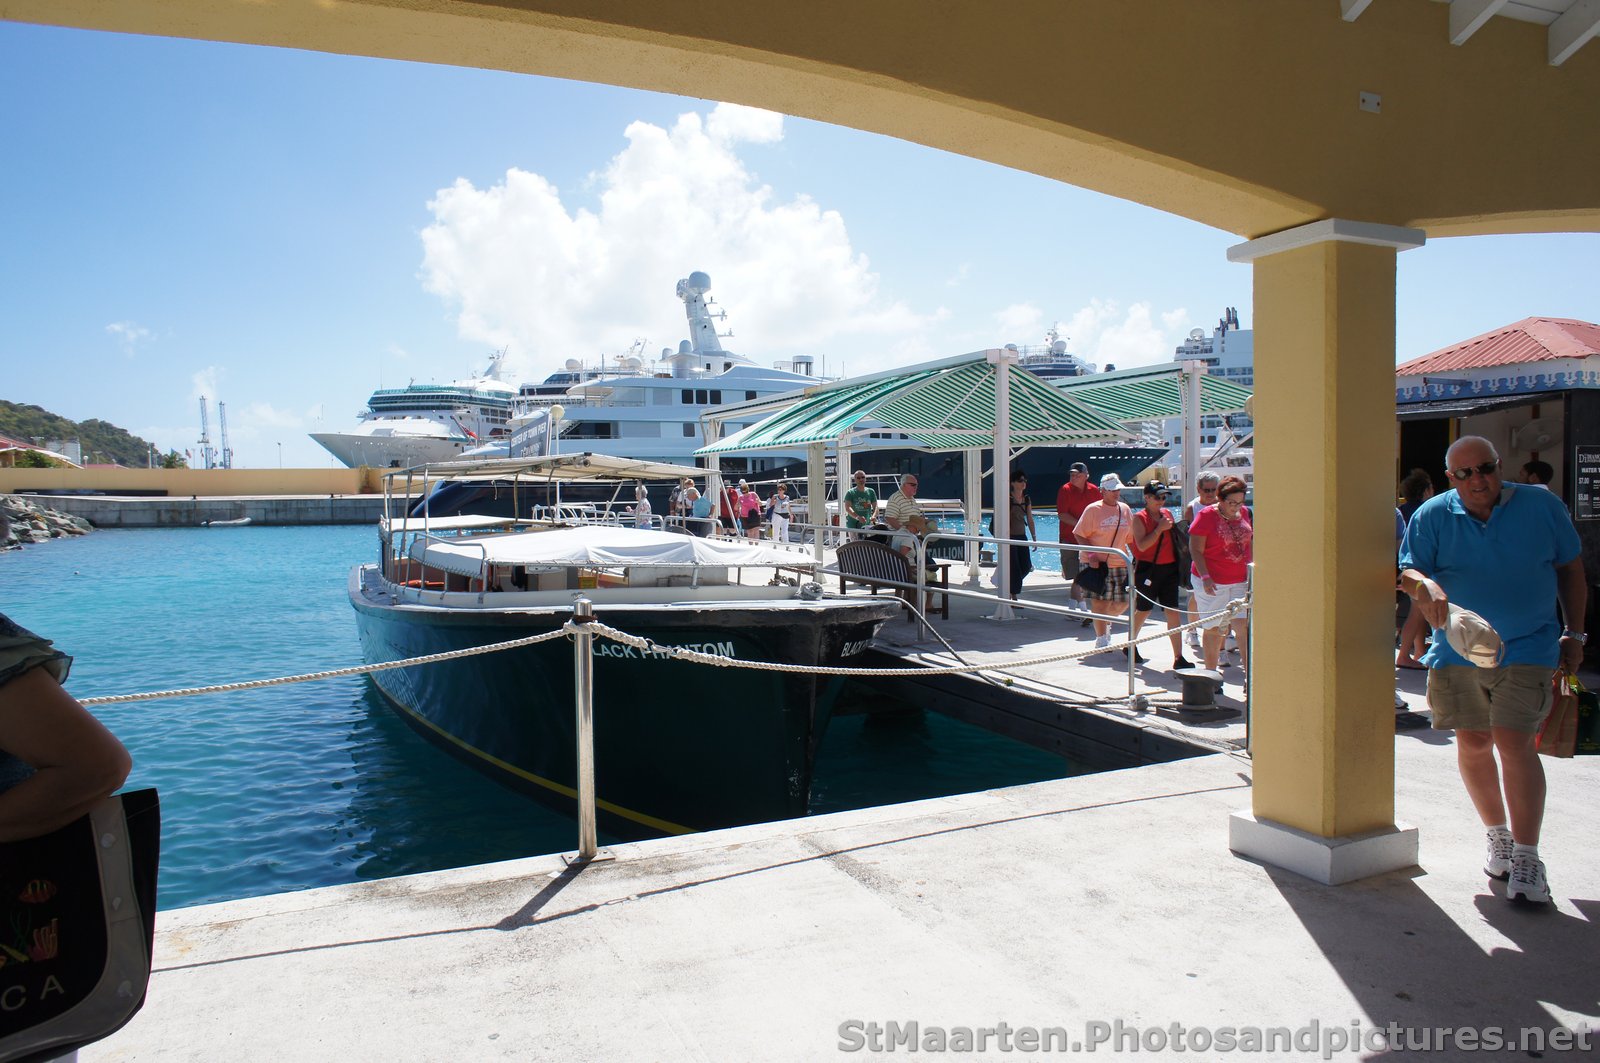 Black Phantom Water Taxi docked at cruise area of St Maarten.jpg
